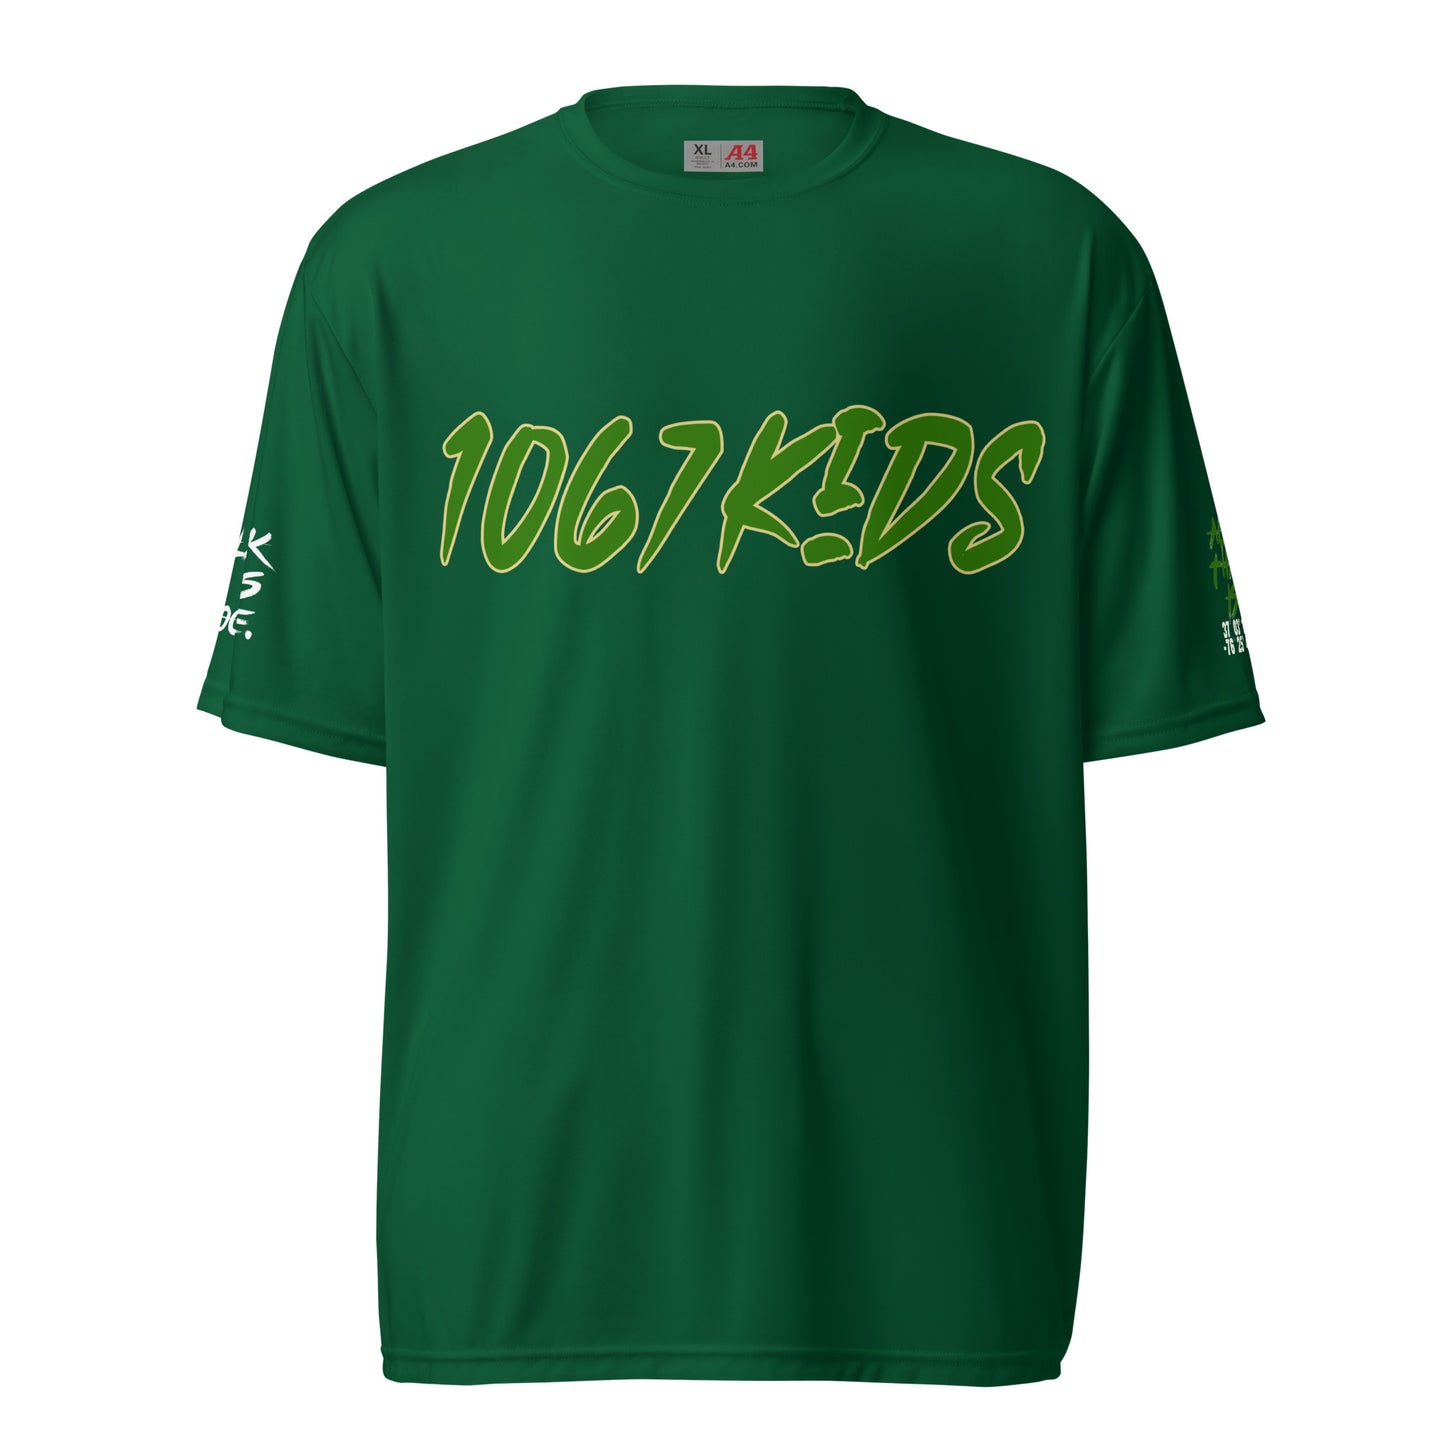 1067 Kids crew neck t-shirt